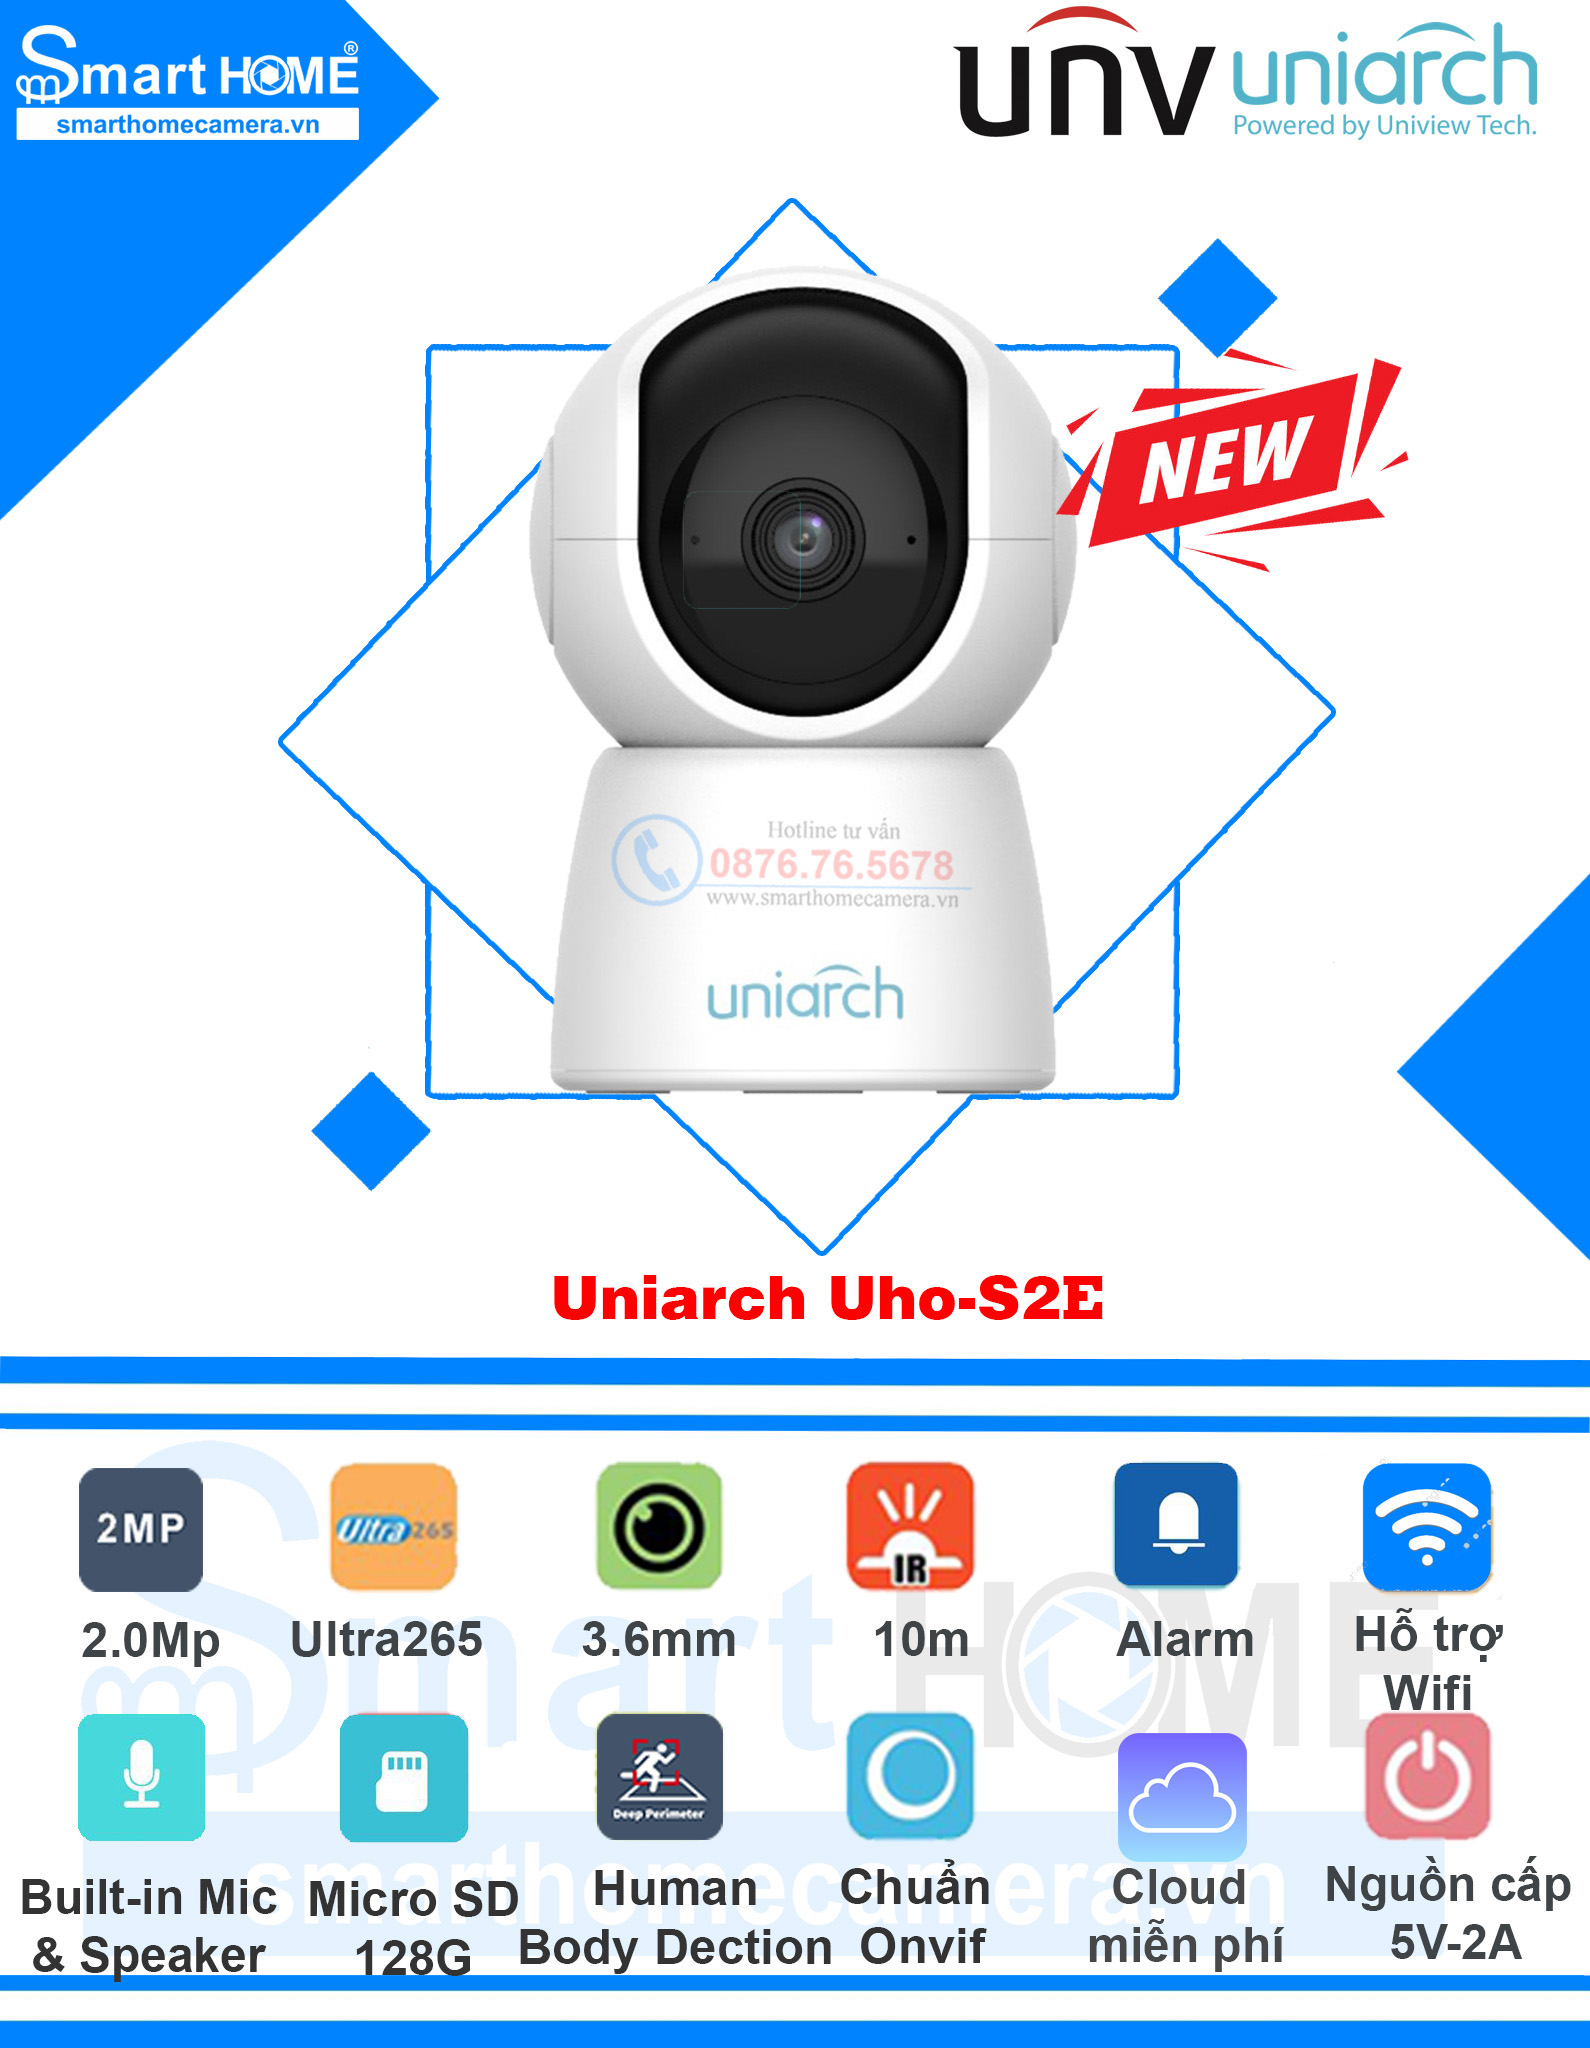 Giới thiệu sản phẩm Camera IP Wifi Uniarch Uho-S2E 1080P FullHD